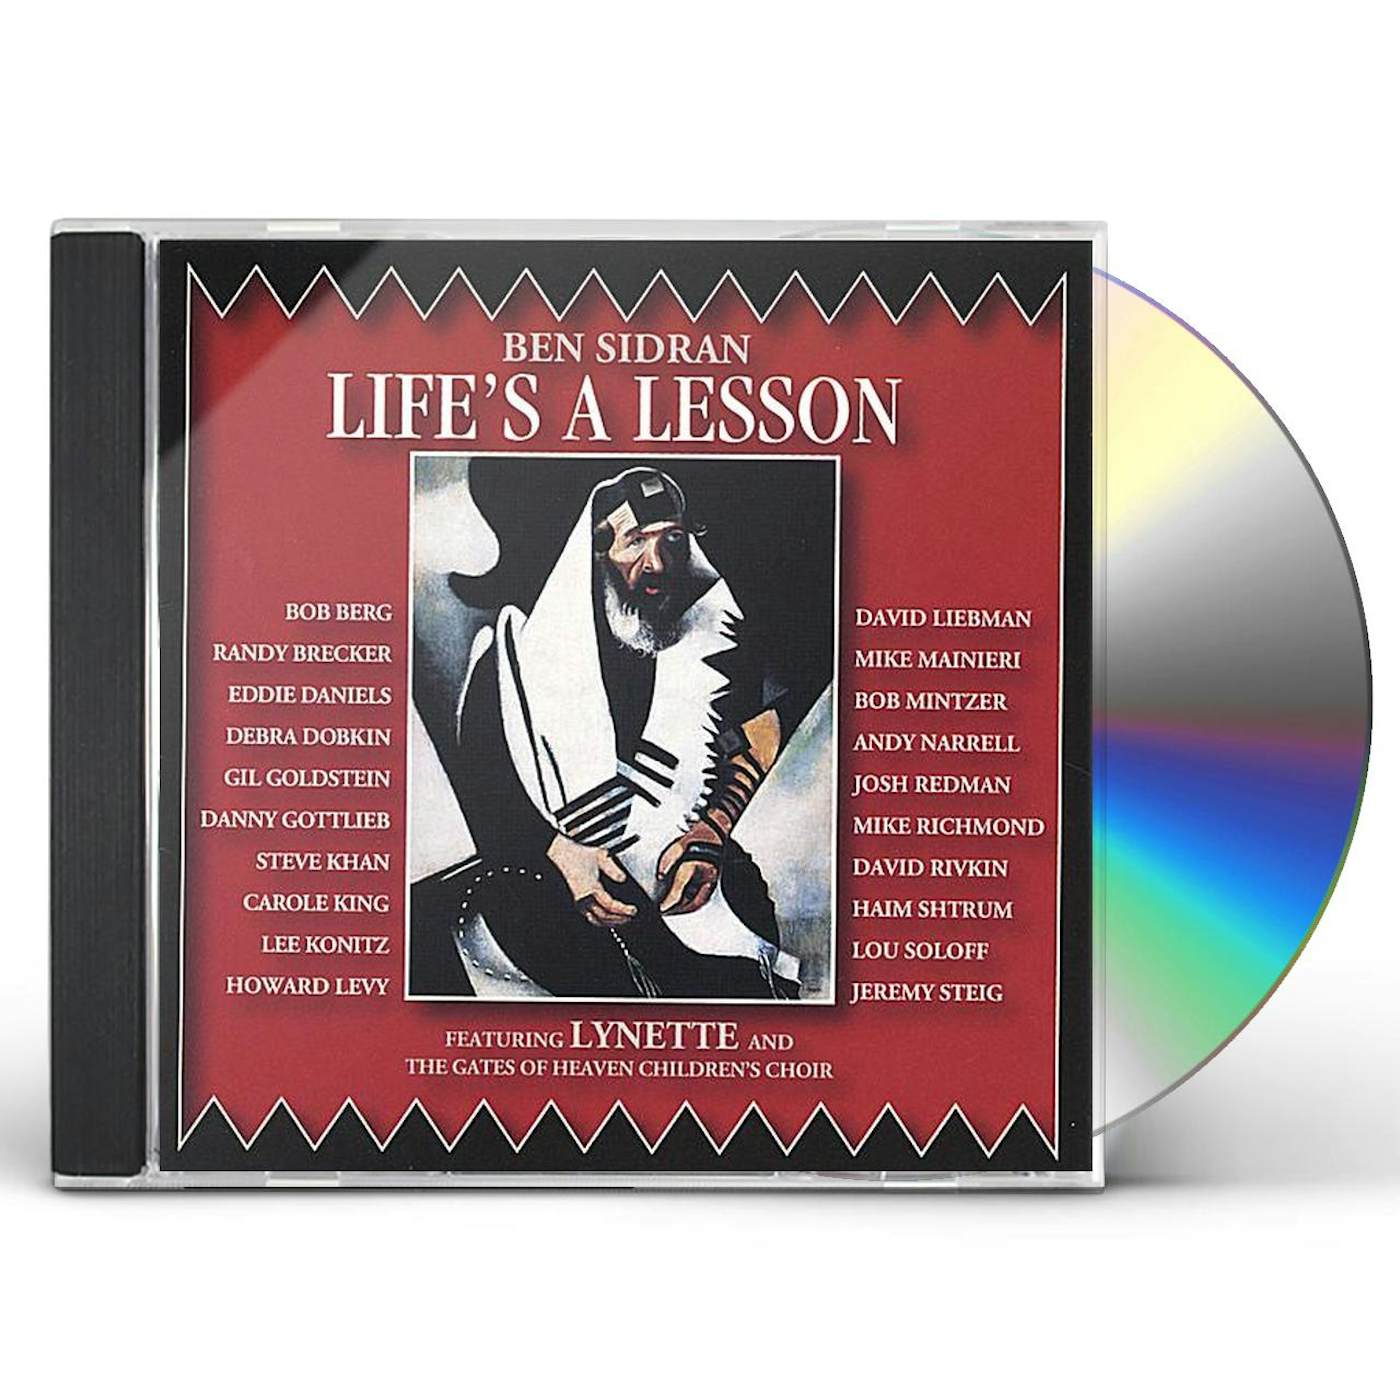 Ben Sidran LIFE'S A LESSON CD